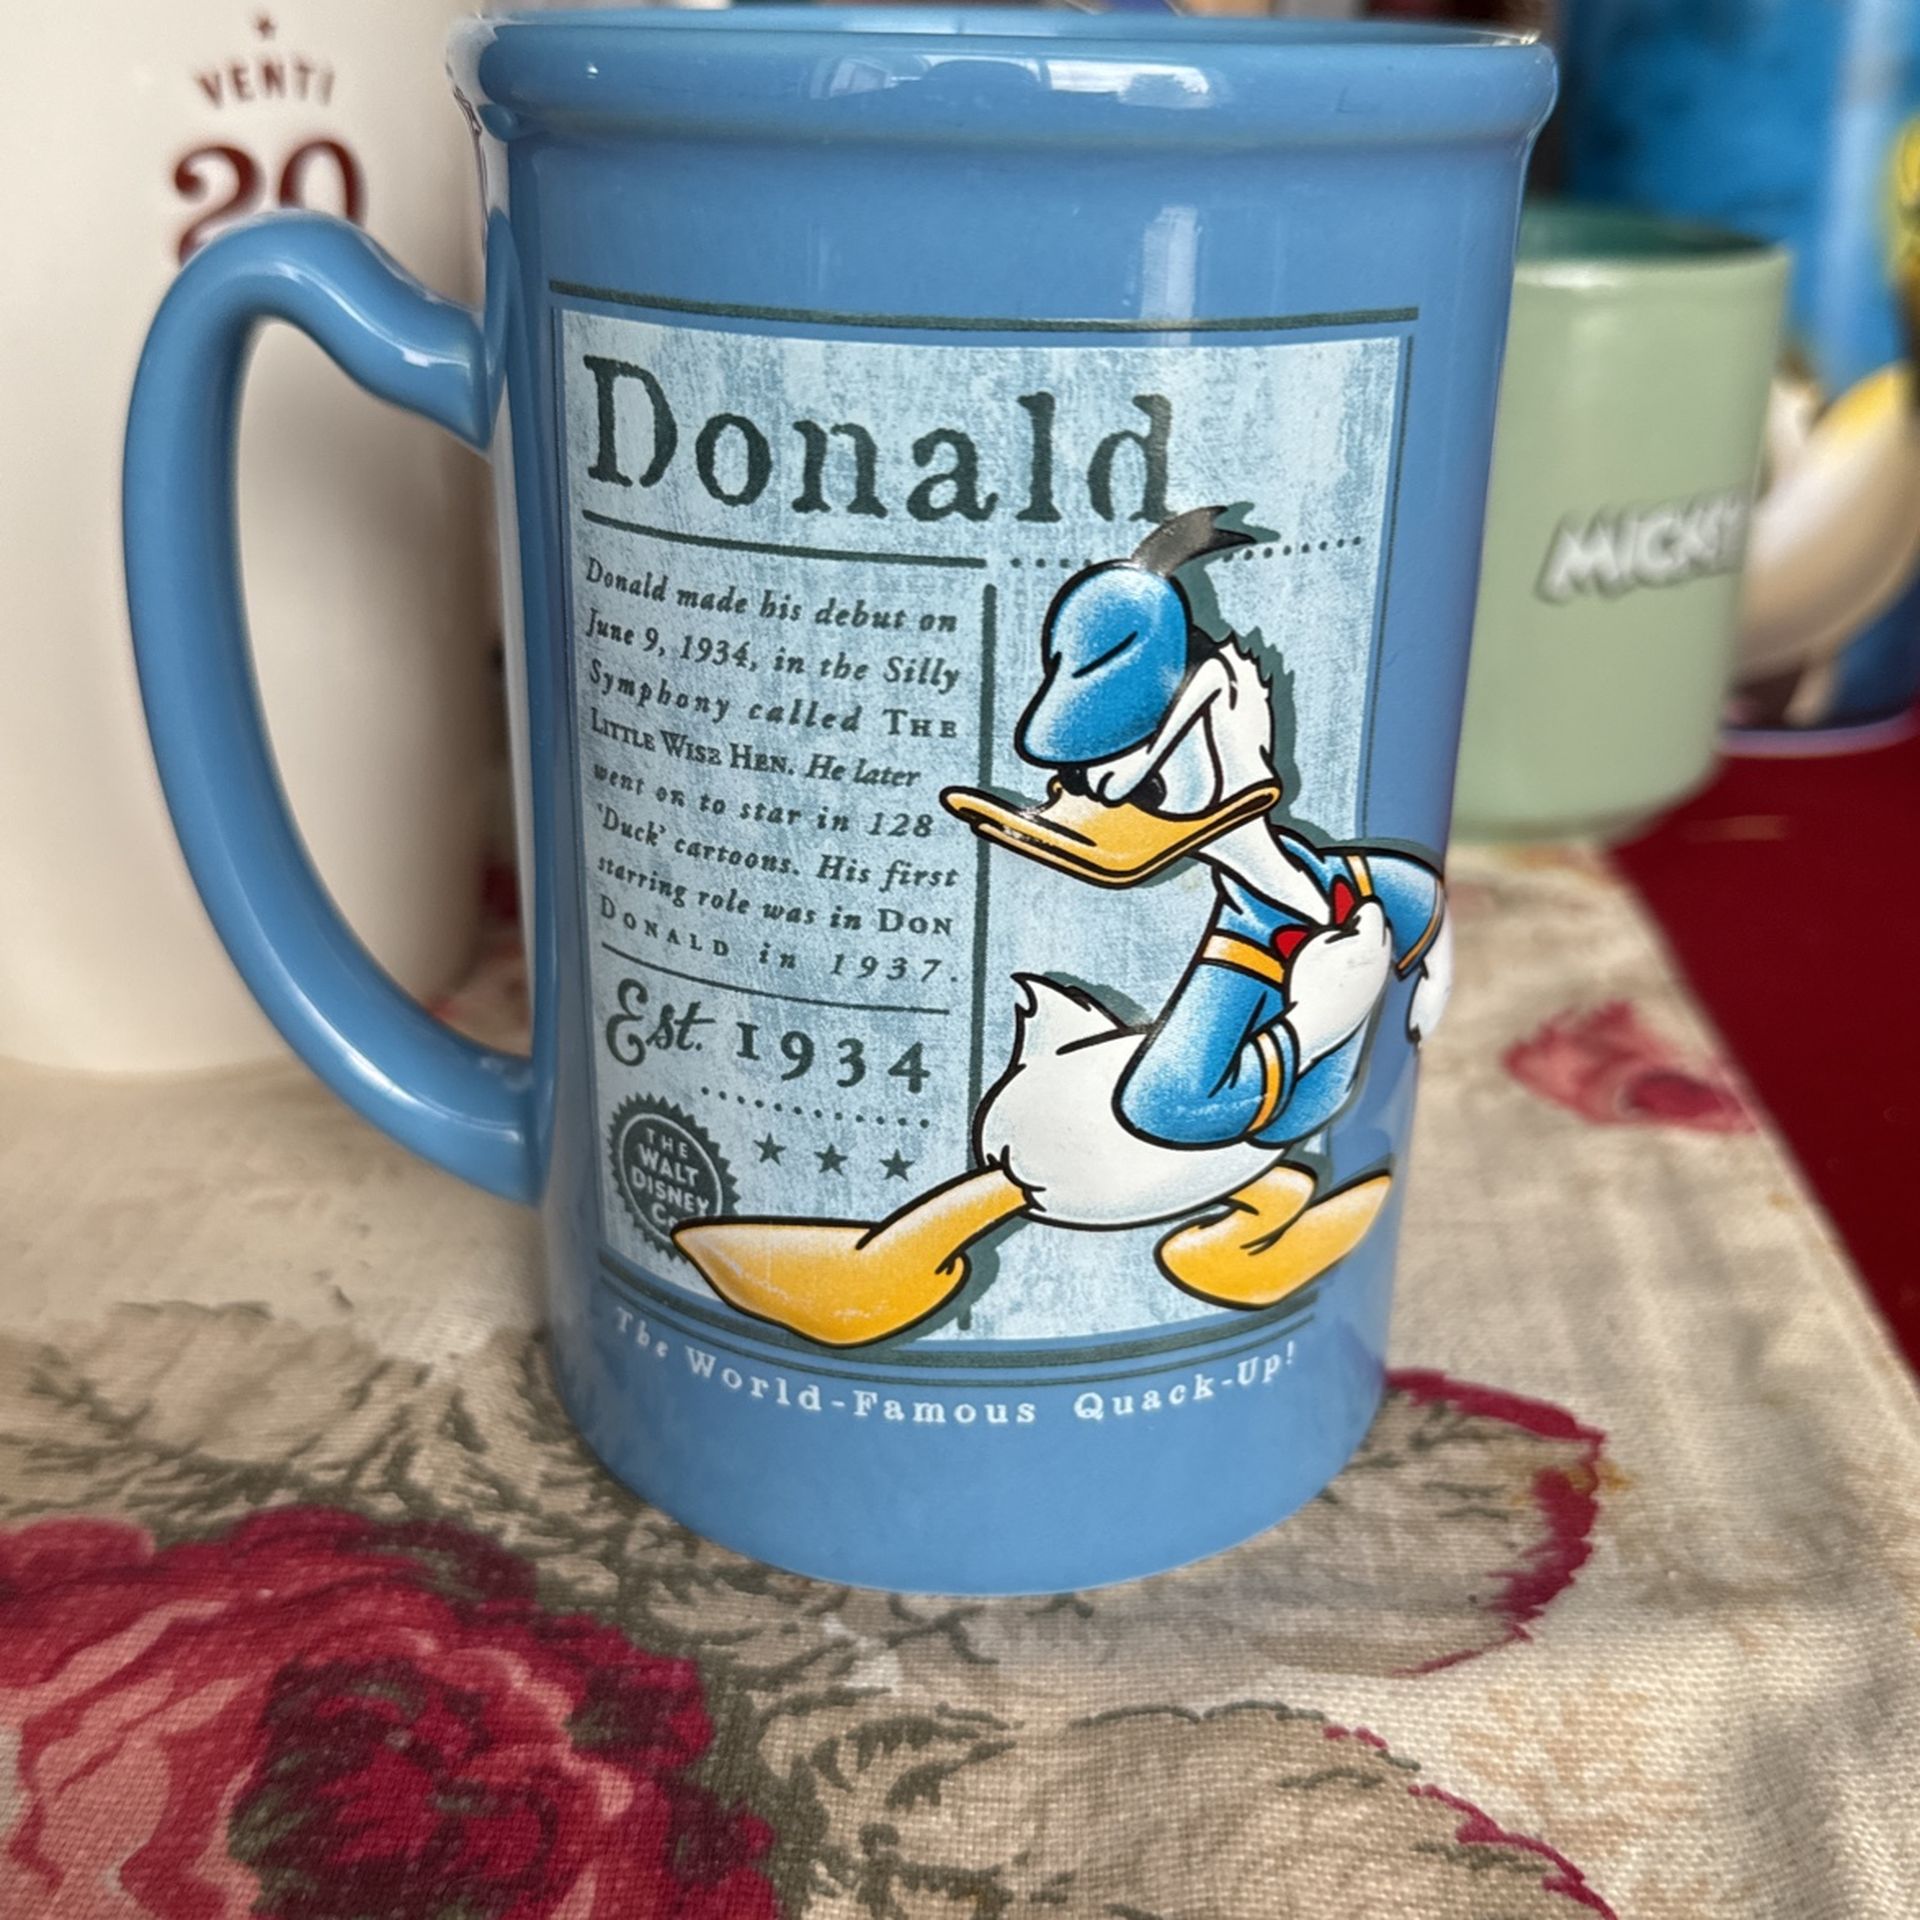 Disney Store 3D Donald Duck 16 ounce Mug ~ The World Famous Quack-up